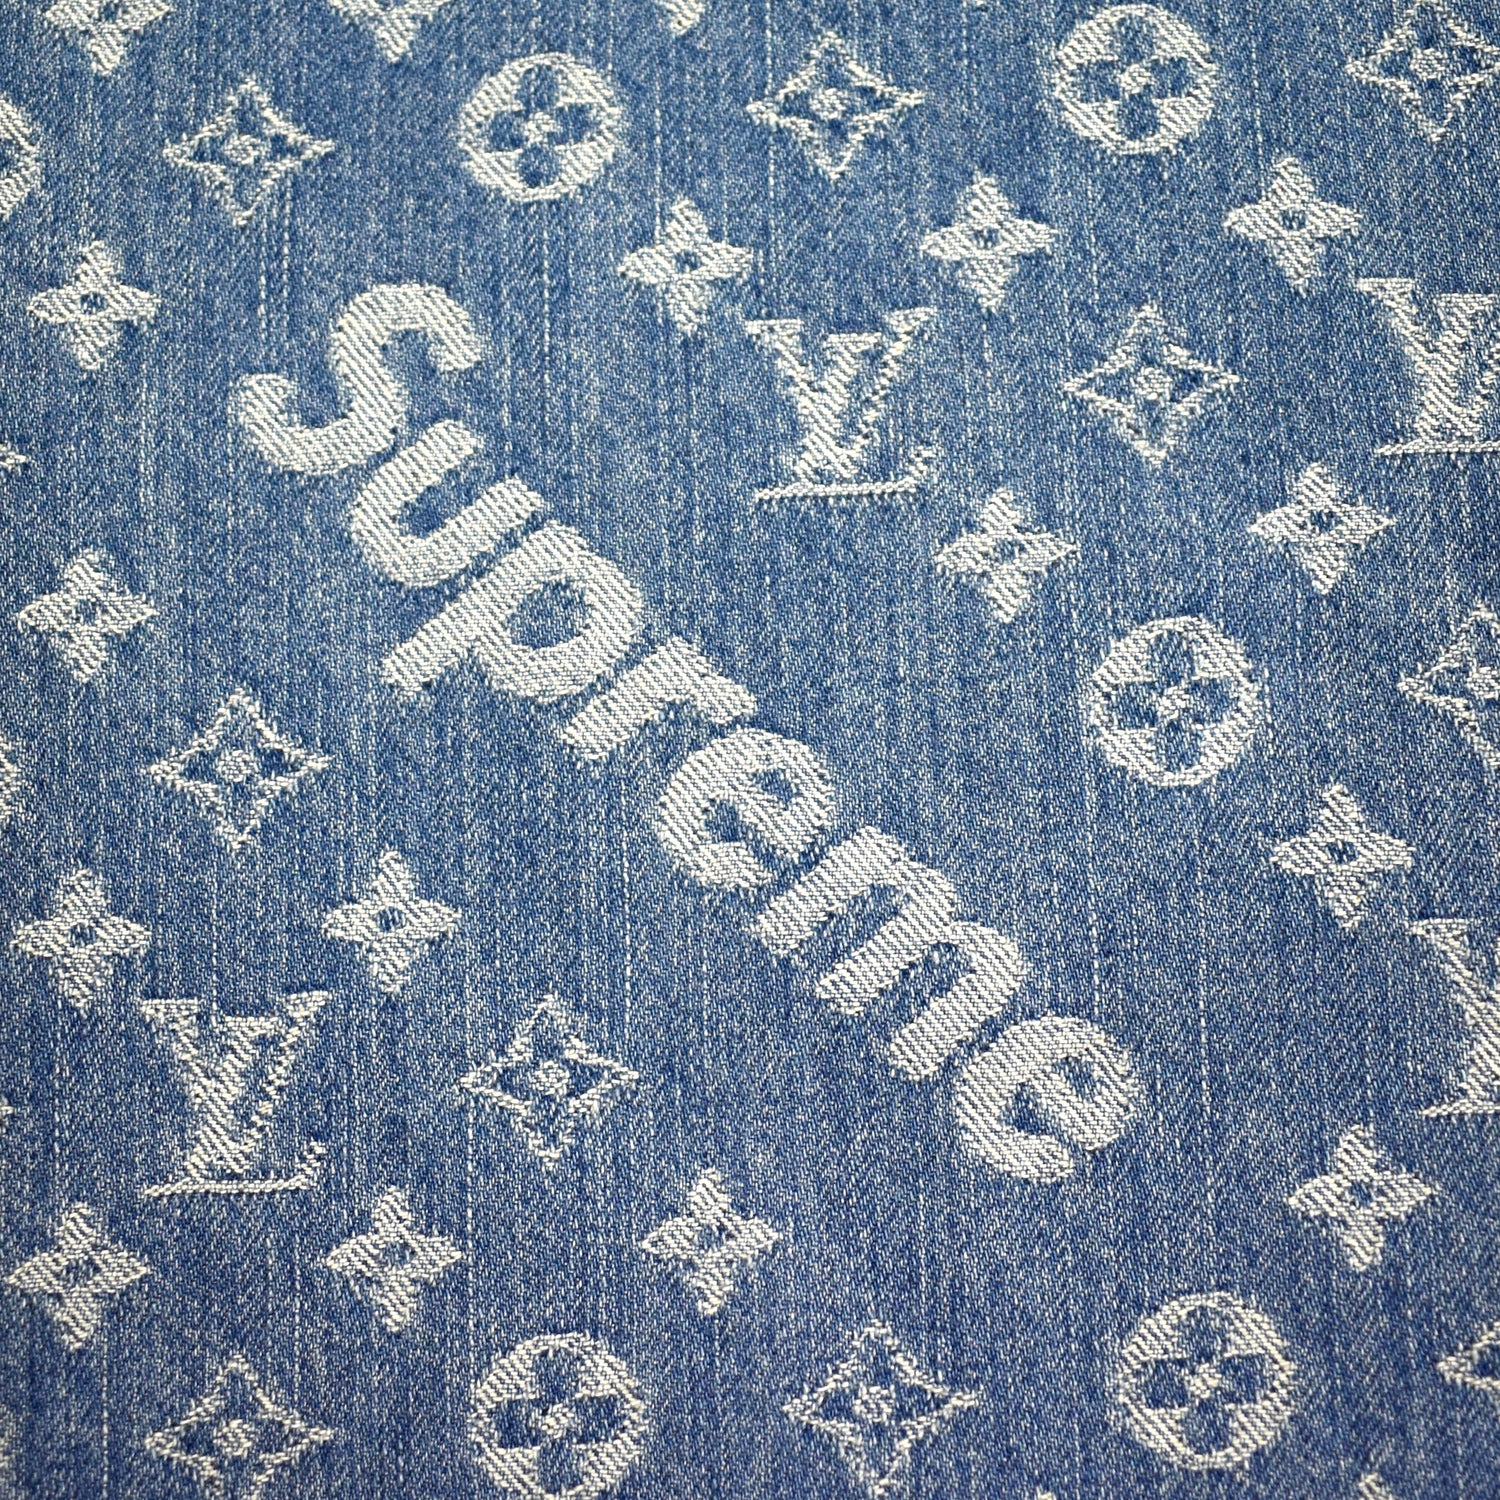 Louis Vuitton x Supreme - LV Monogram Box Logo Blue Denim Jeans – eluXive